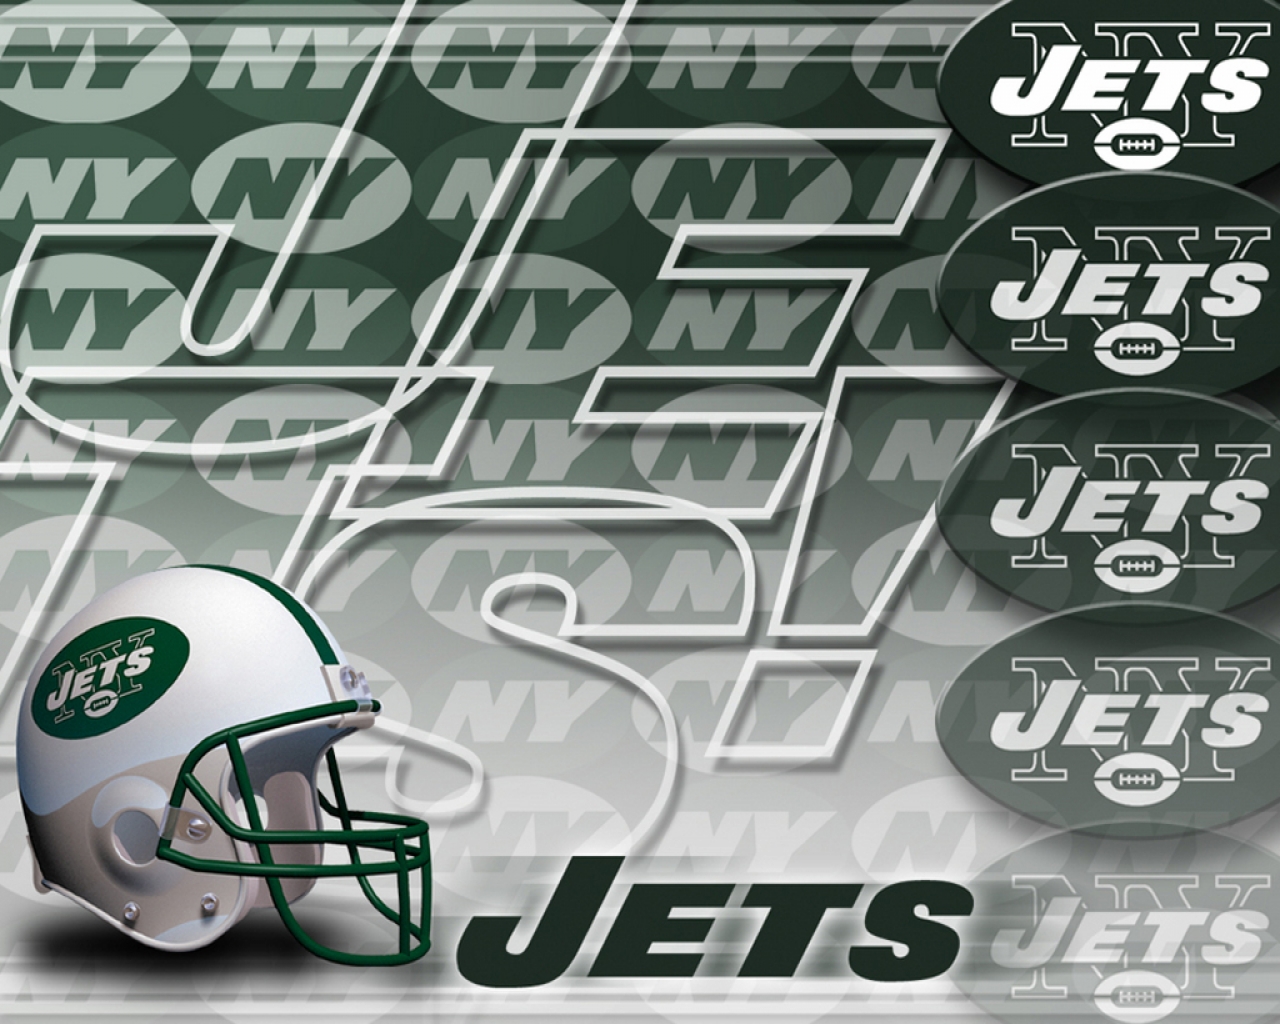 Free New York Jets desktop wallpaper New York Jets wallpapers